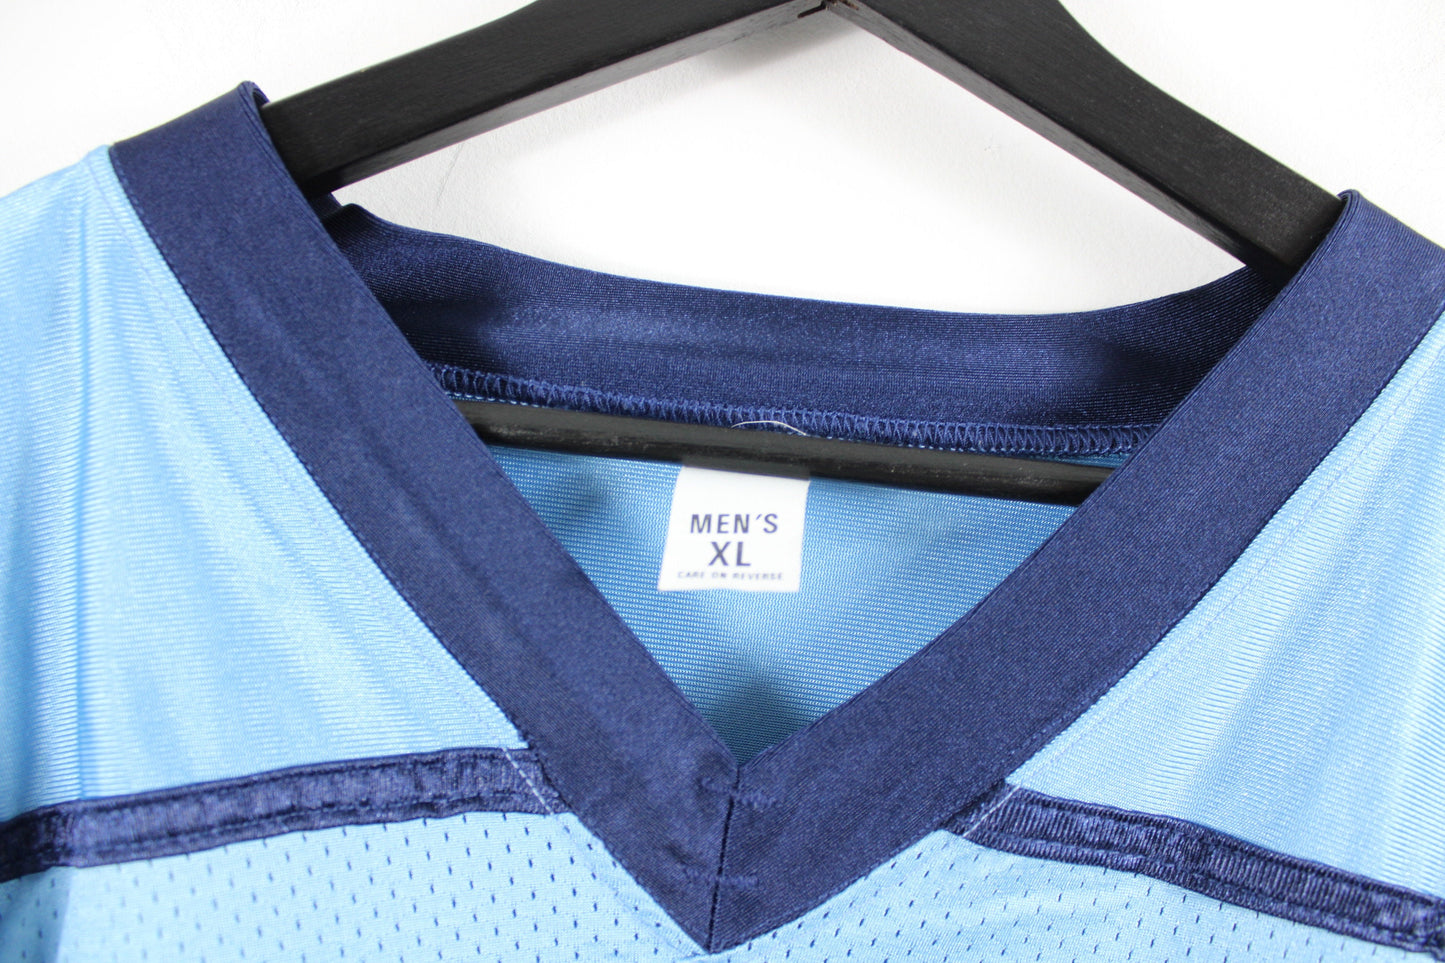 American-Football Jersey / Vintage Blue + White Cotton wash Shirt / 90s Sports Team Uniform